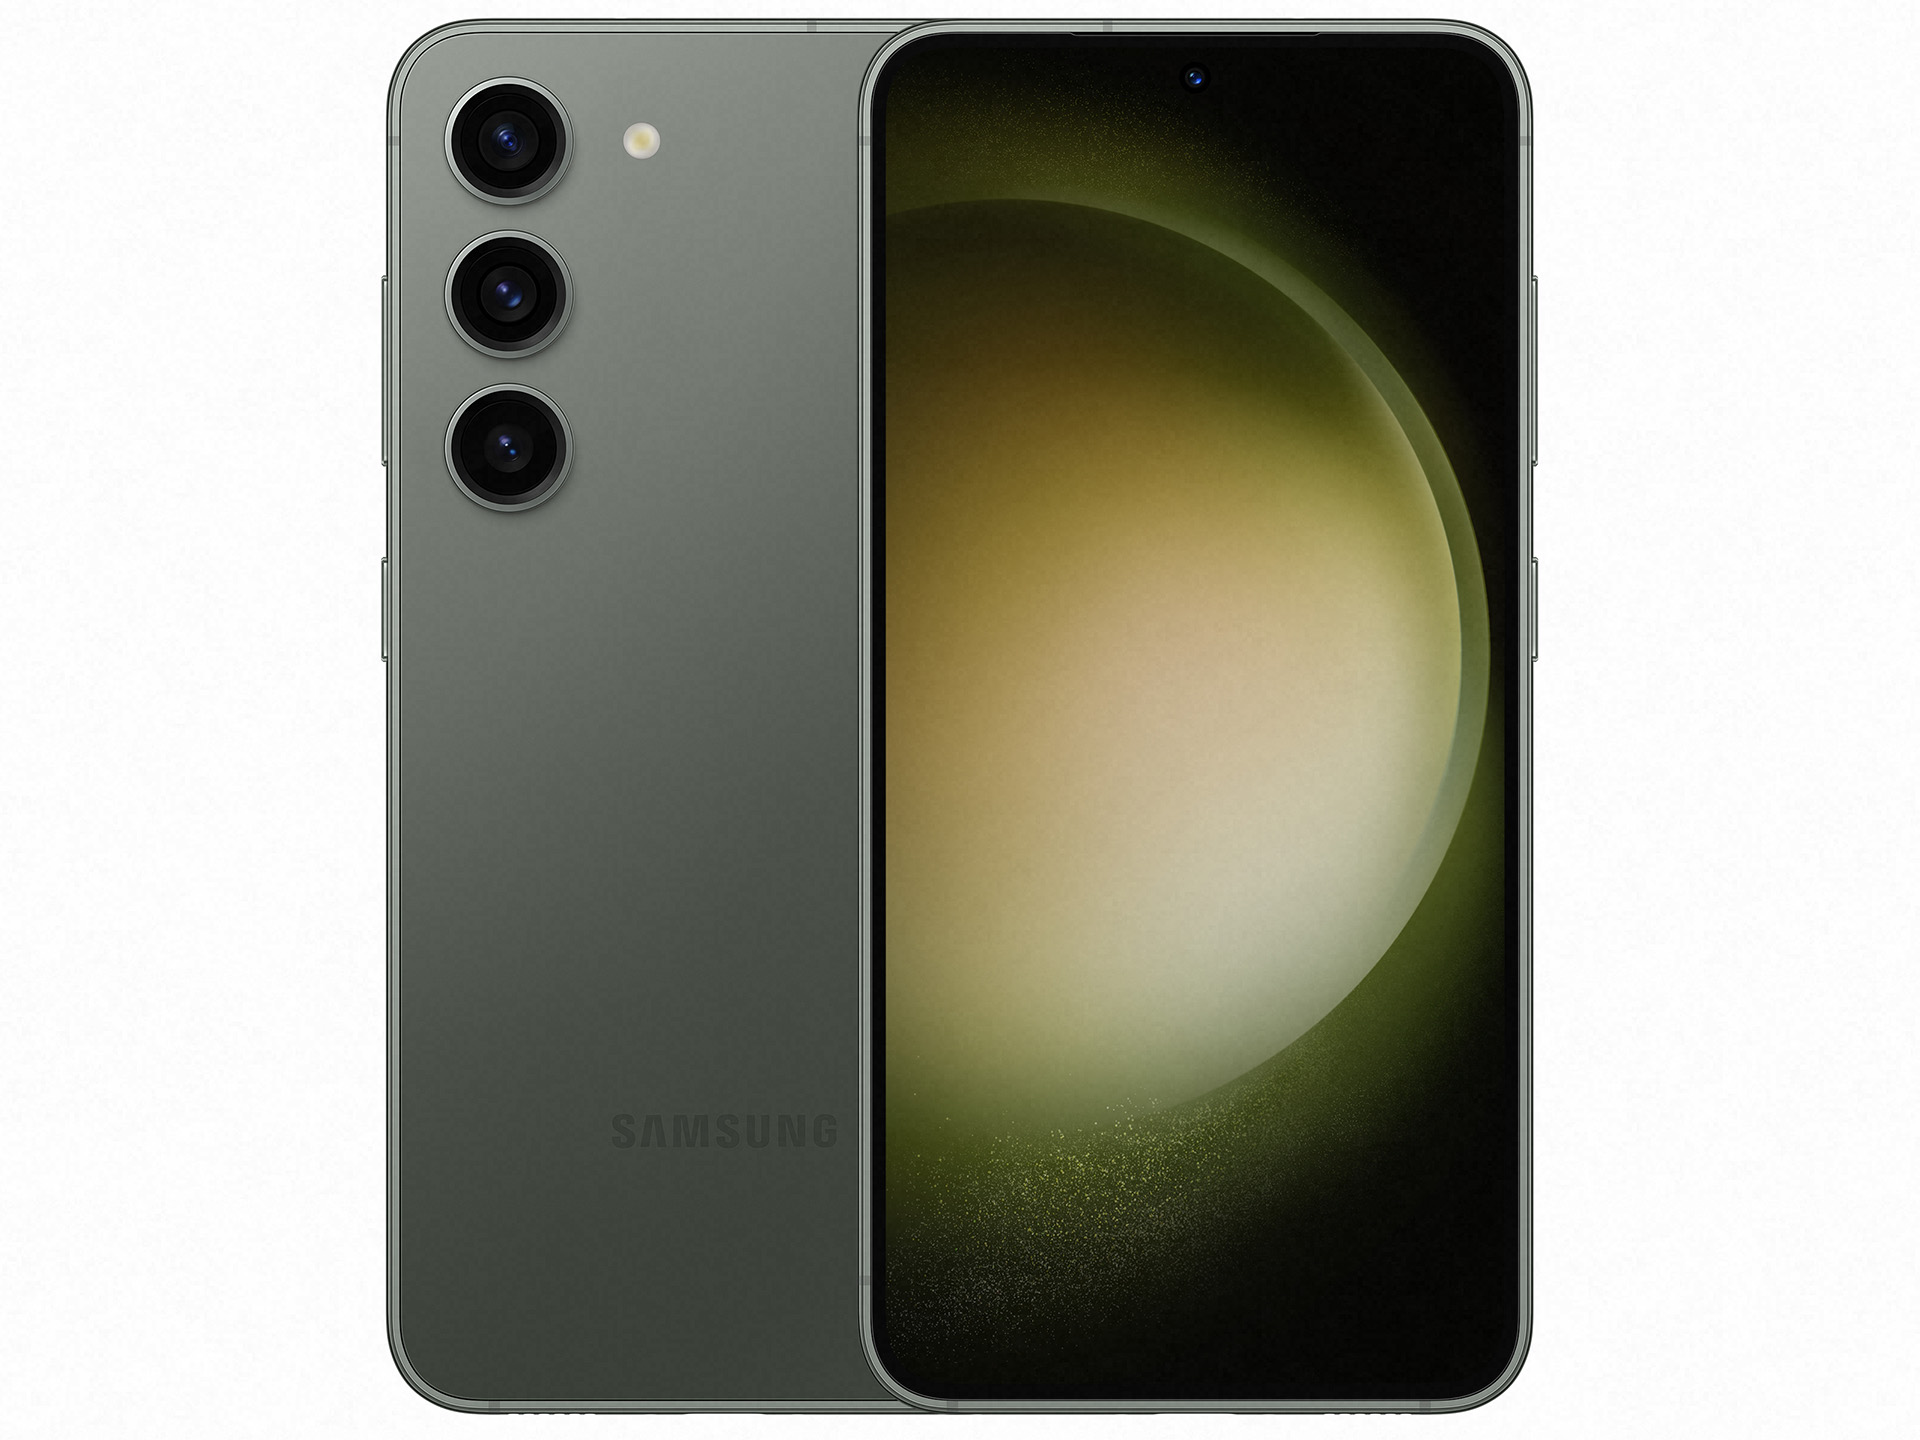 Leaked Samsung Galaxy S23 specs speak of incremental upgrades over